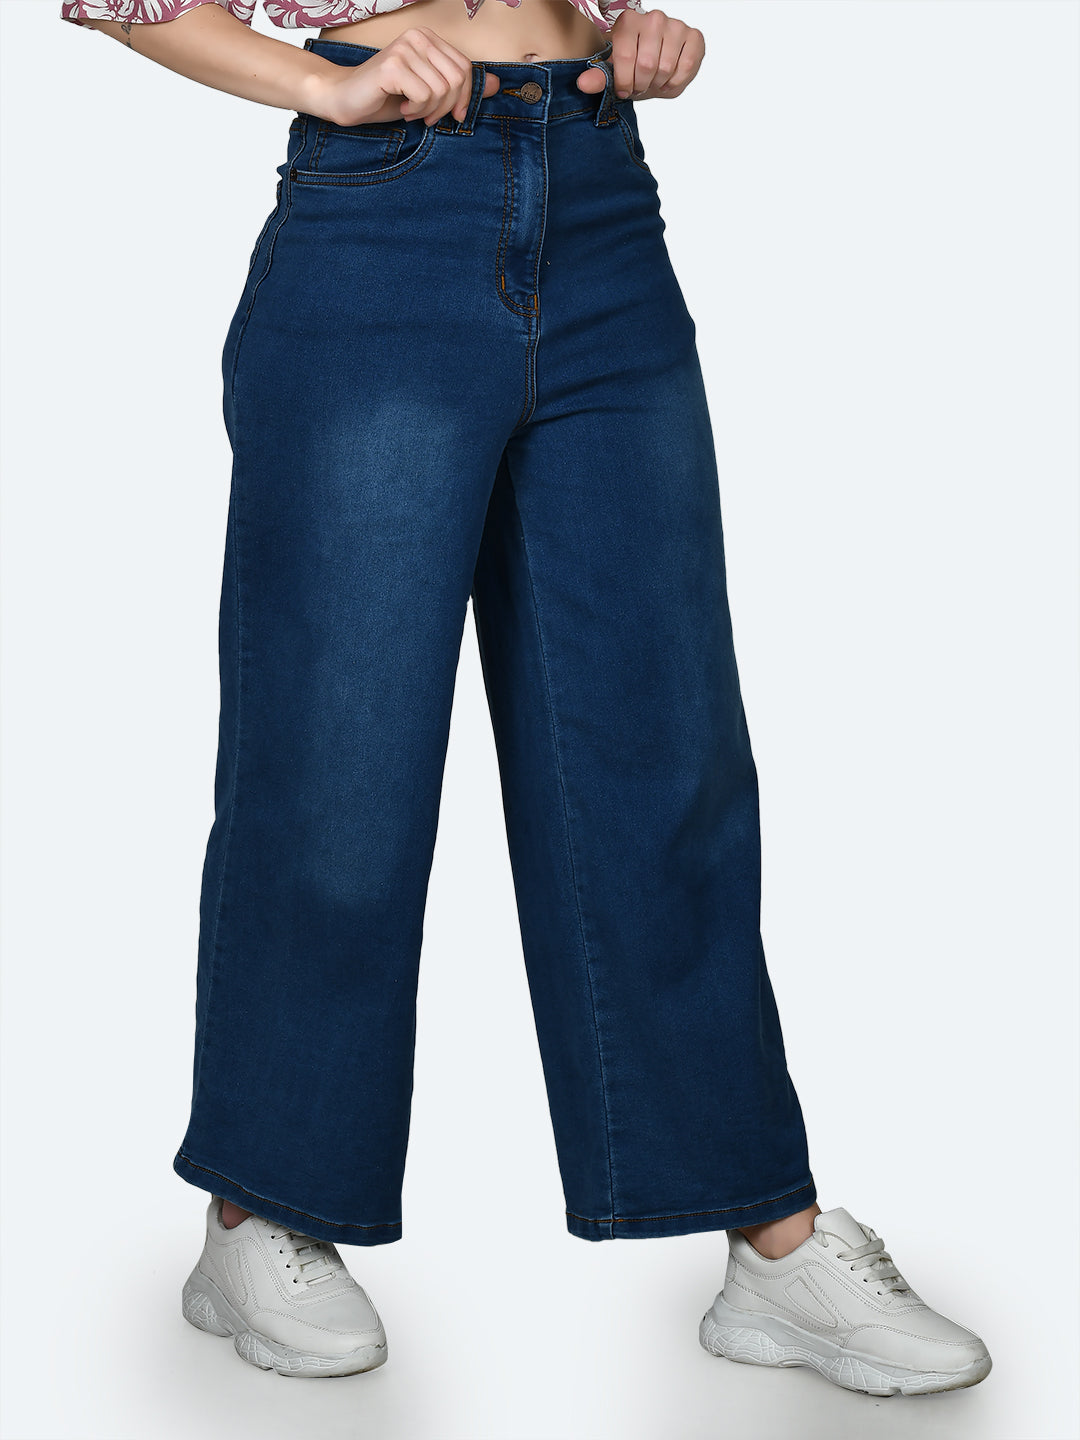 Blue Solid Wide Leg Jeans For Women